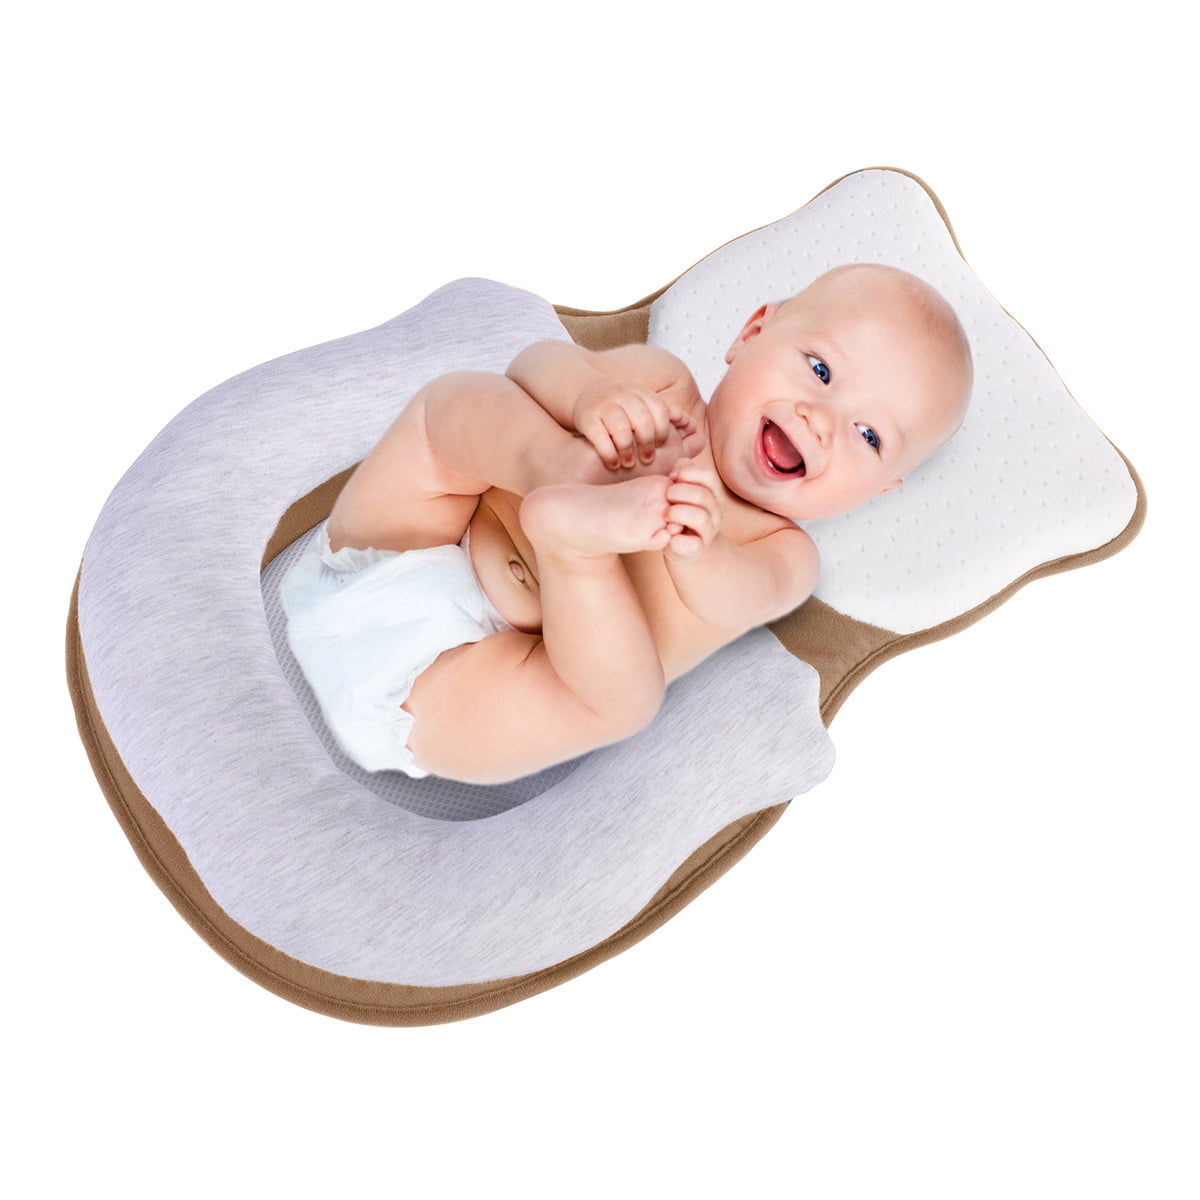 portable baby crib nursery